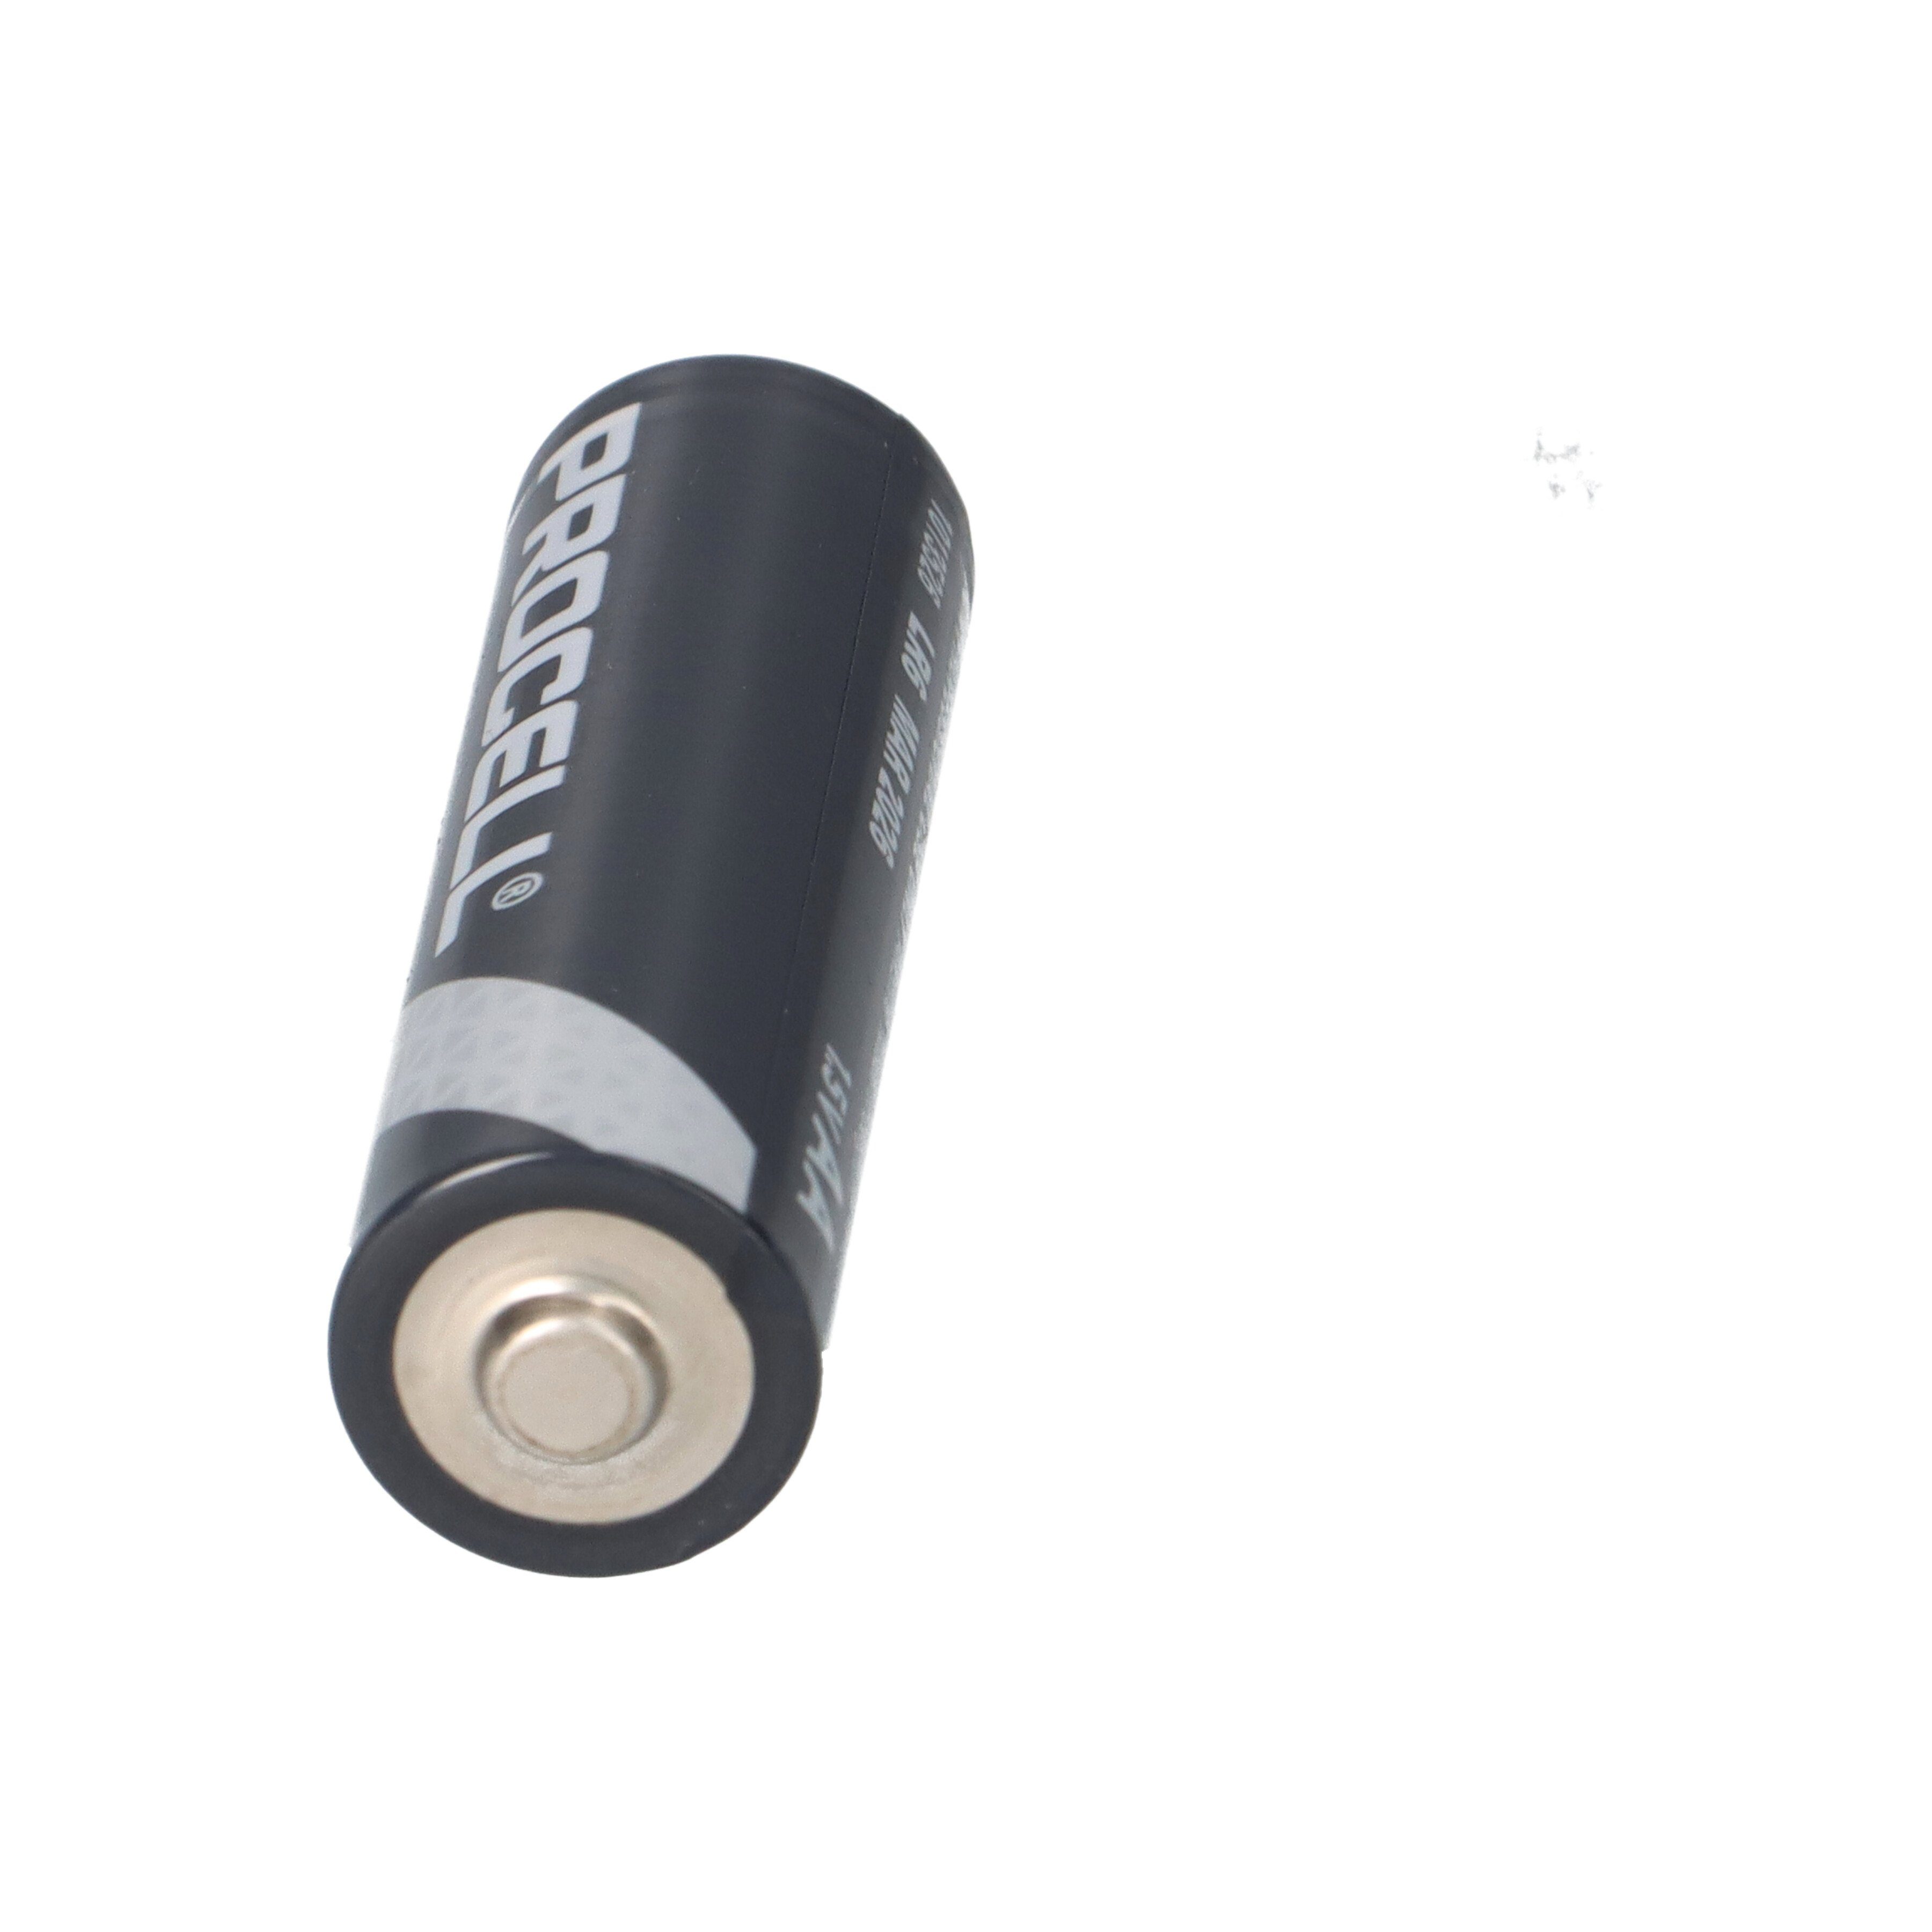 Duracell 40x Procell Batterien MN1500 MN2400 20x 20x Batterie AA Micro AAA Mignon 